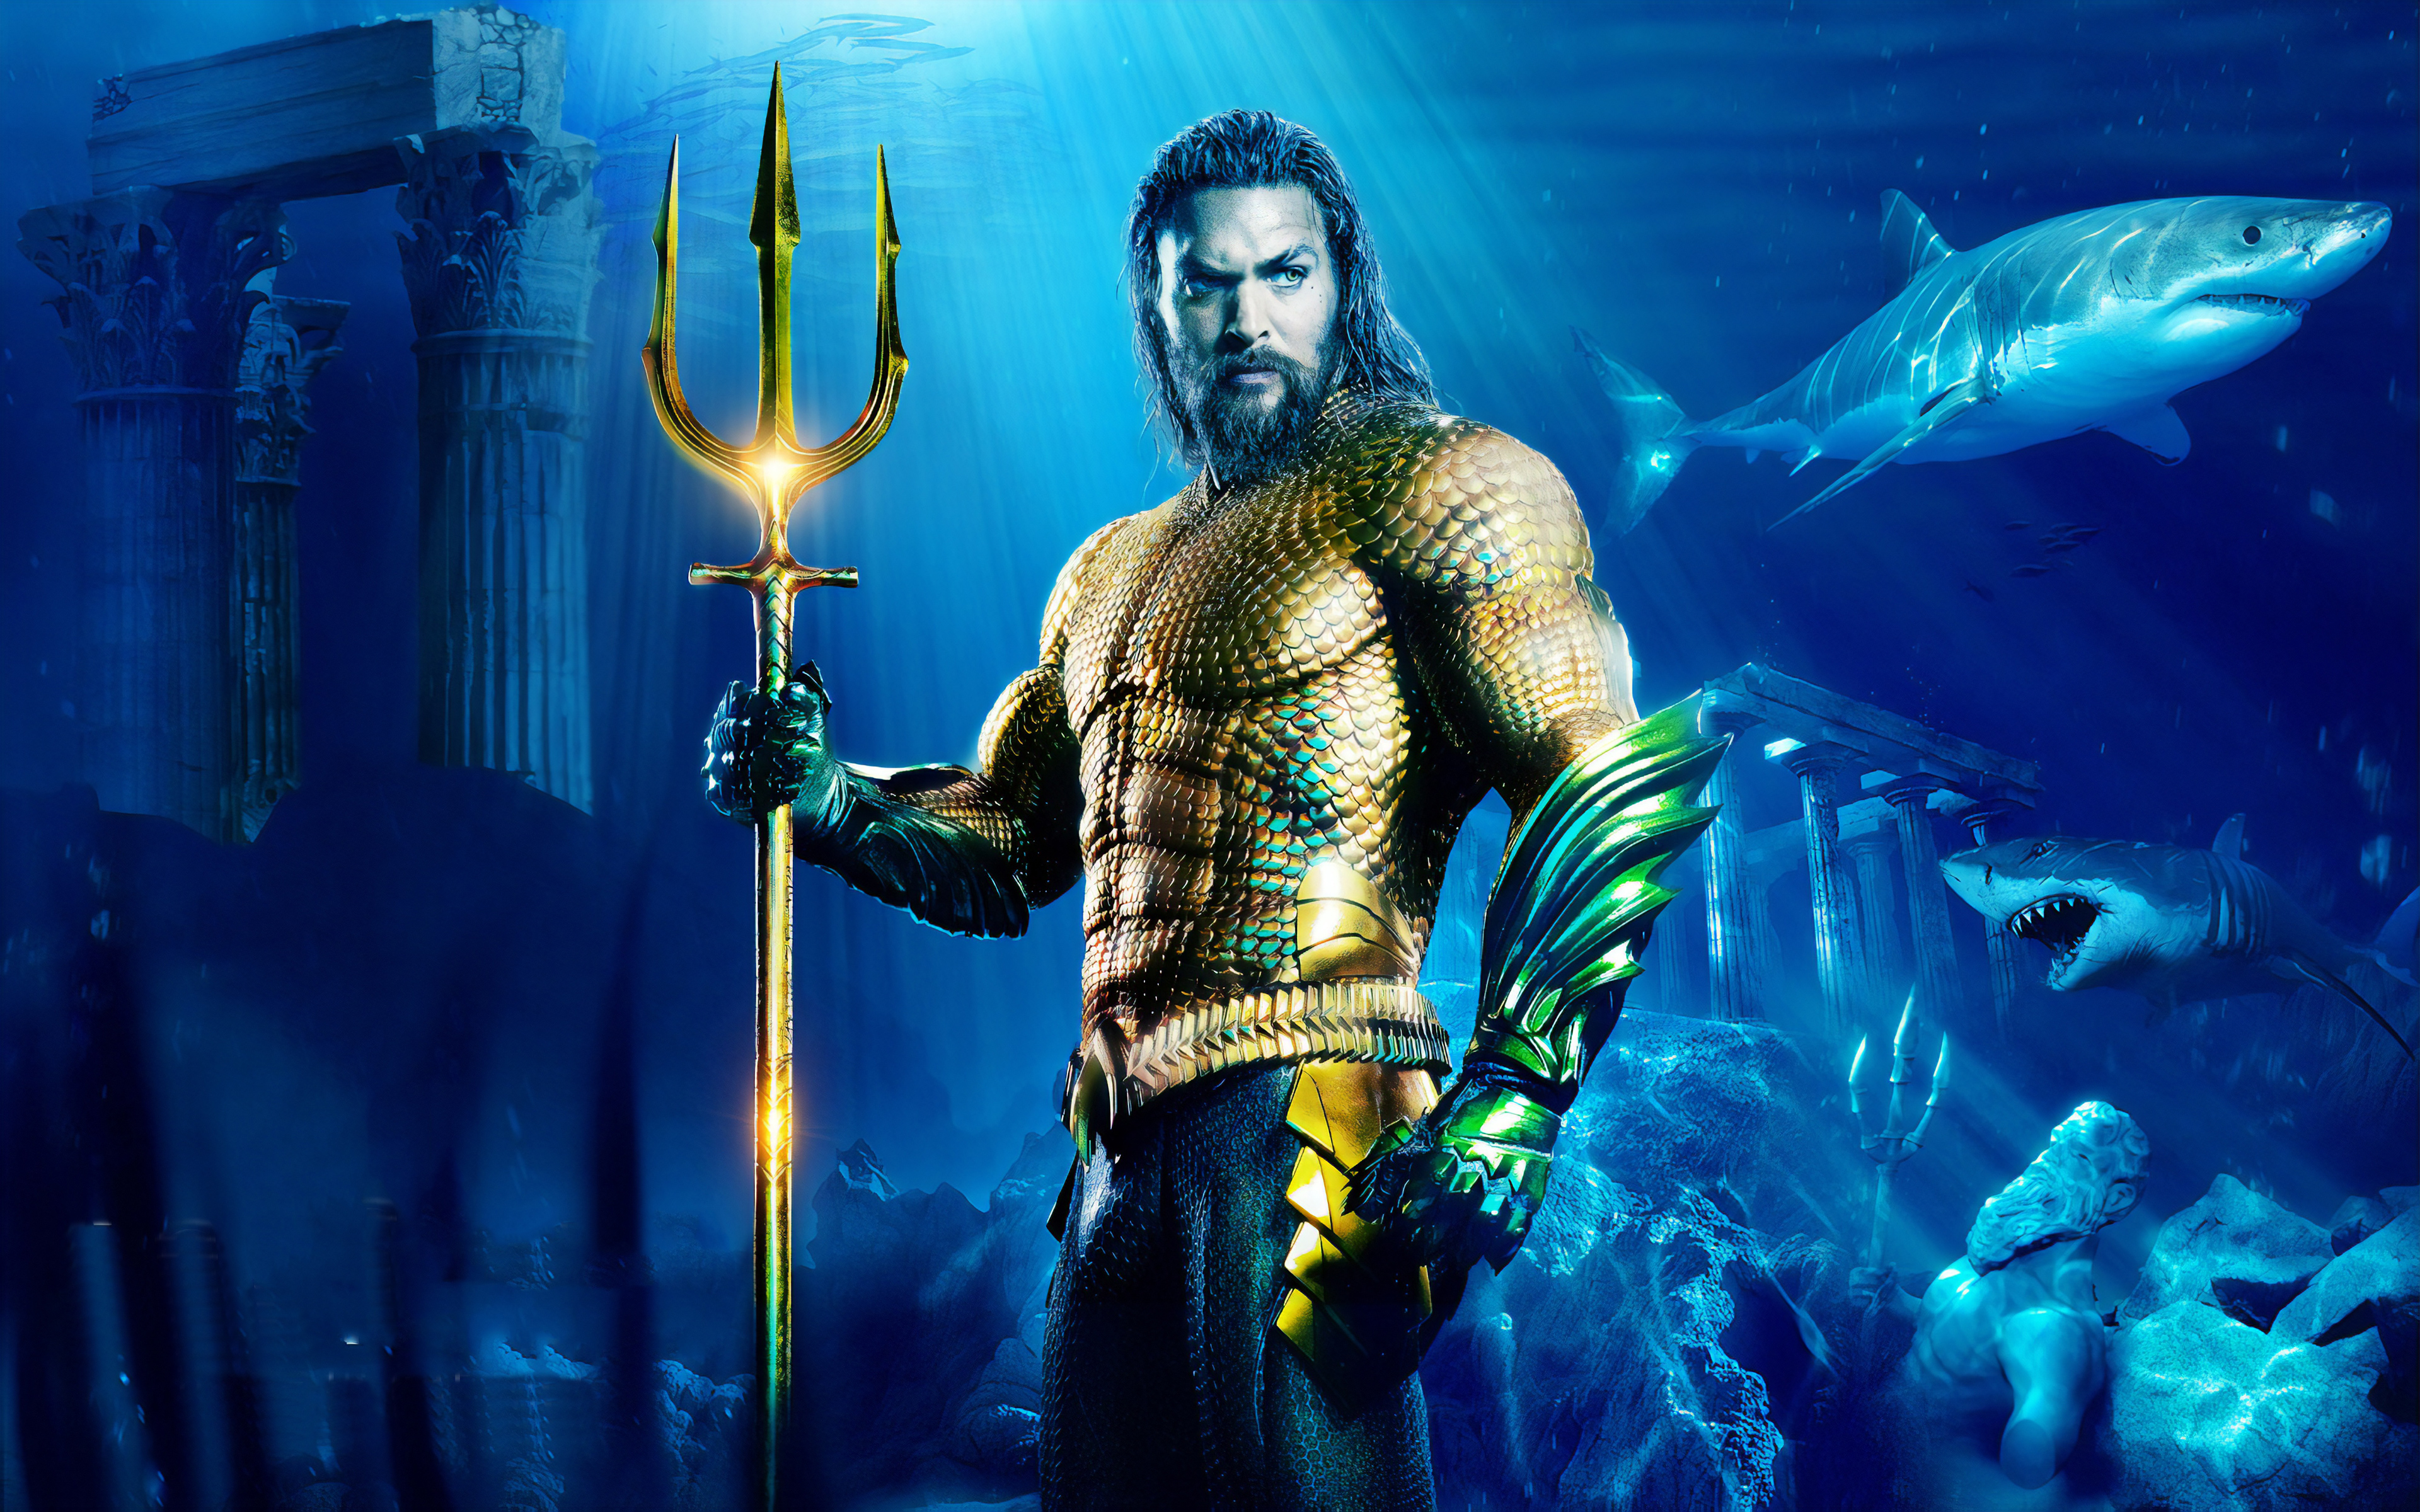 Fondos de Pantalla Aquaman, Imágenes HD Aquaman, Descargar Imágenes Gratis